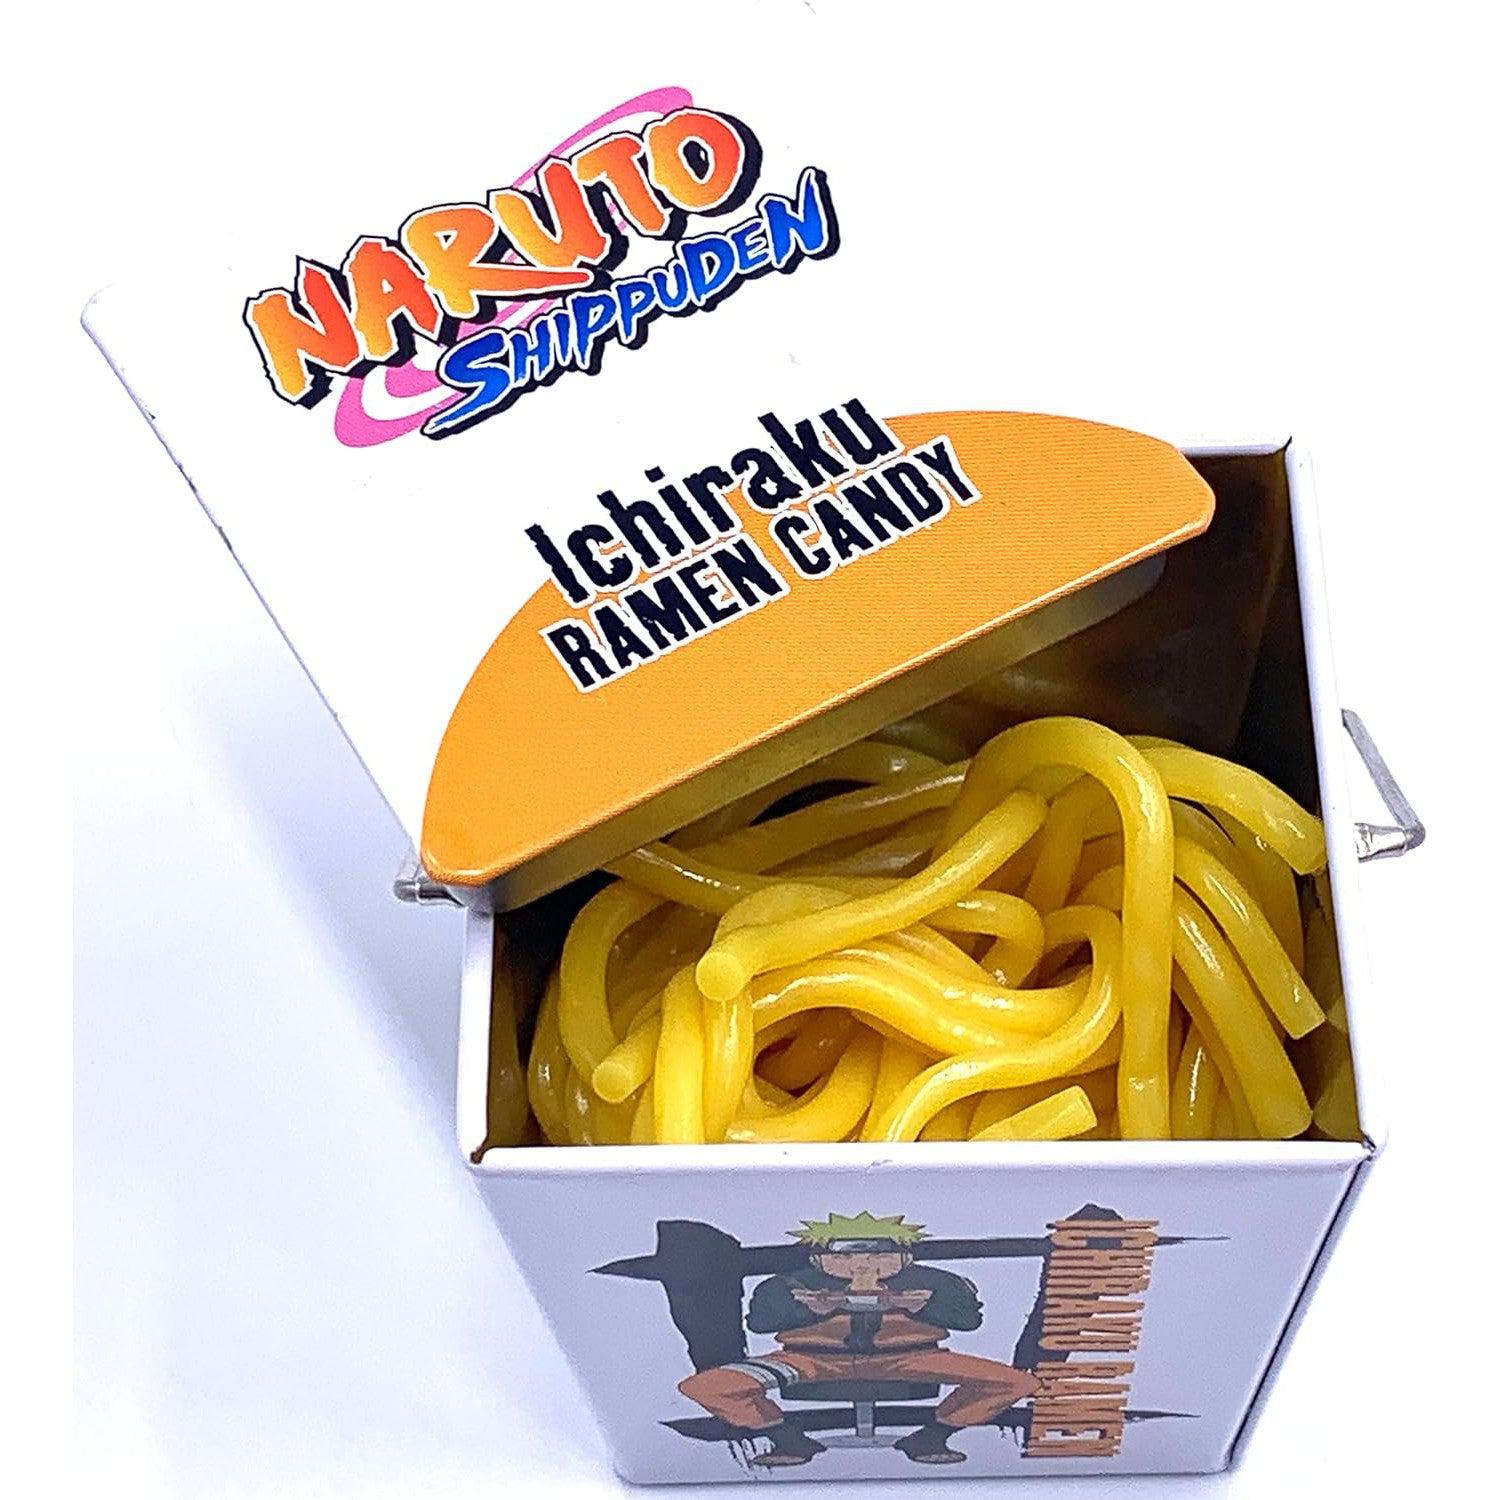 Naruto Shippuden - Ichiraku Ramen Candy Tin-Candy & Treats-Grandpa Joe's Candy Shop-Yellow Springs Toy Company